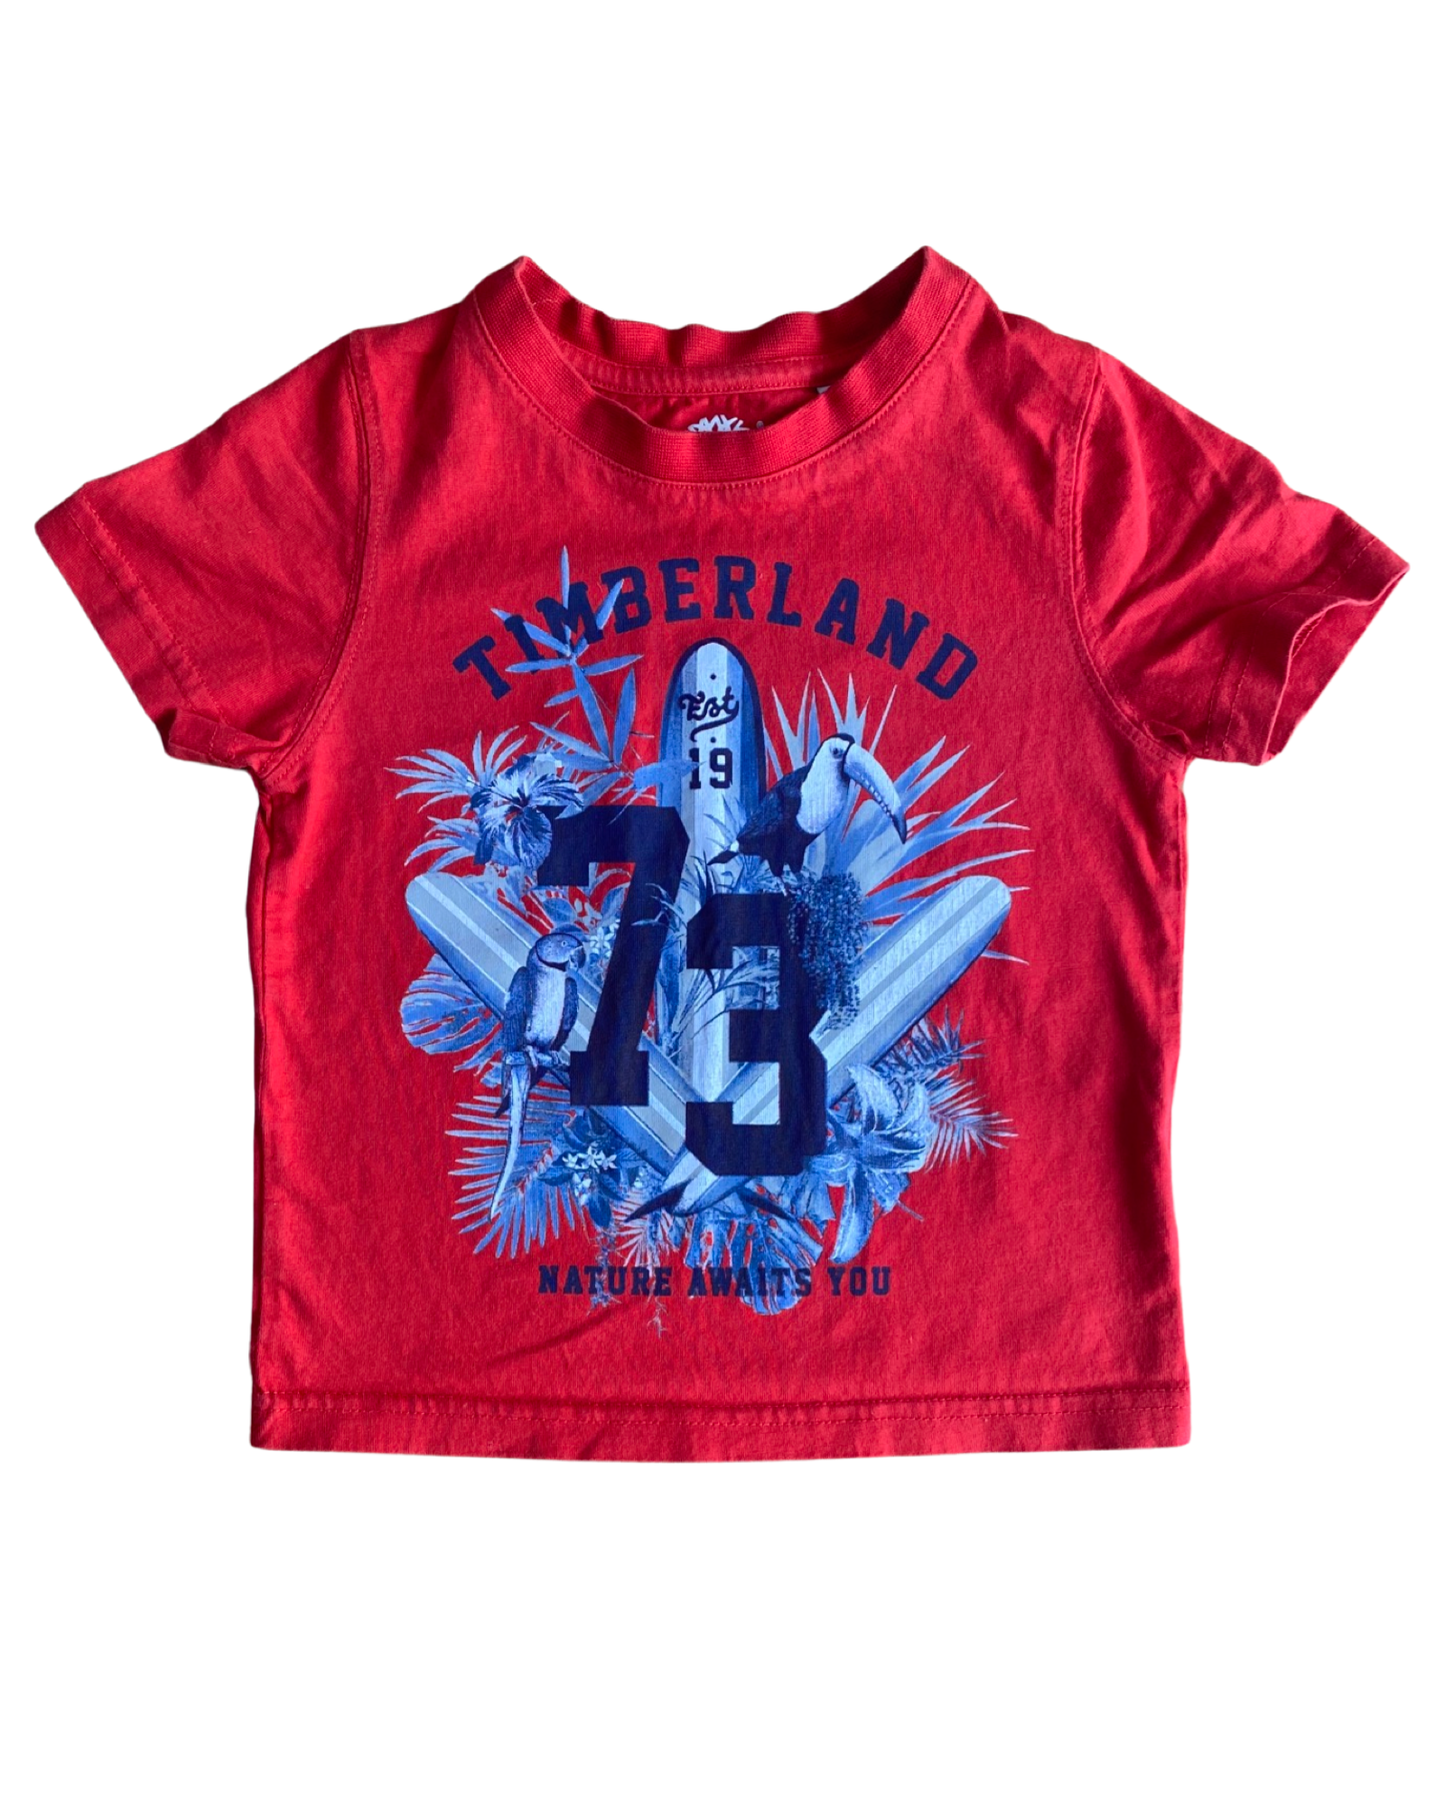 Timberland vintage red printed t shirt (2-3yrs)